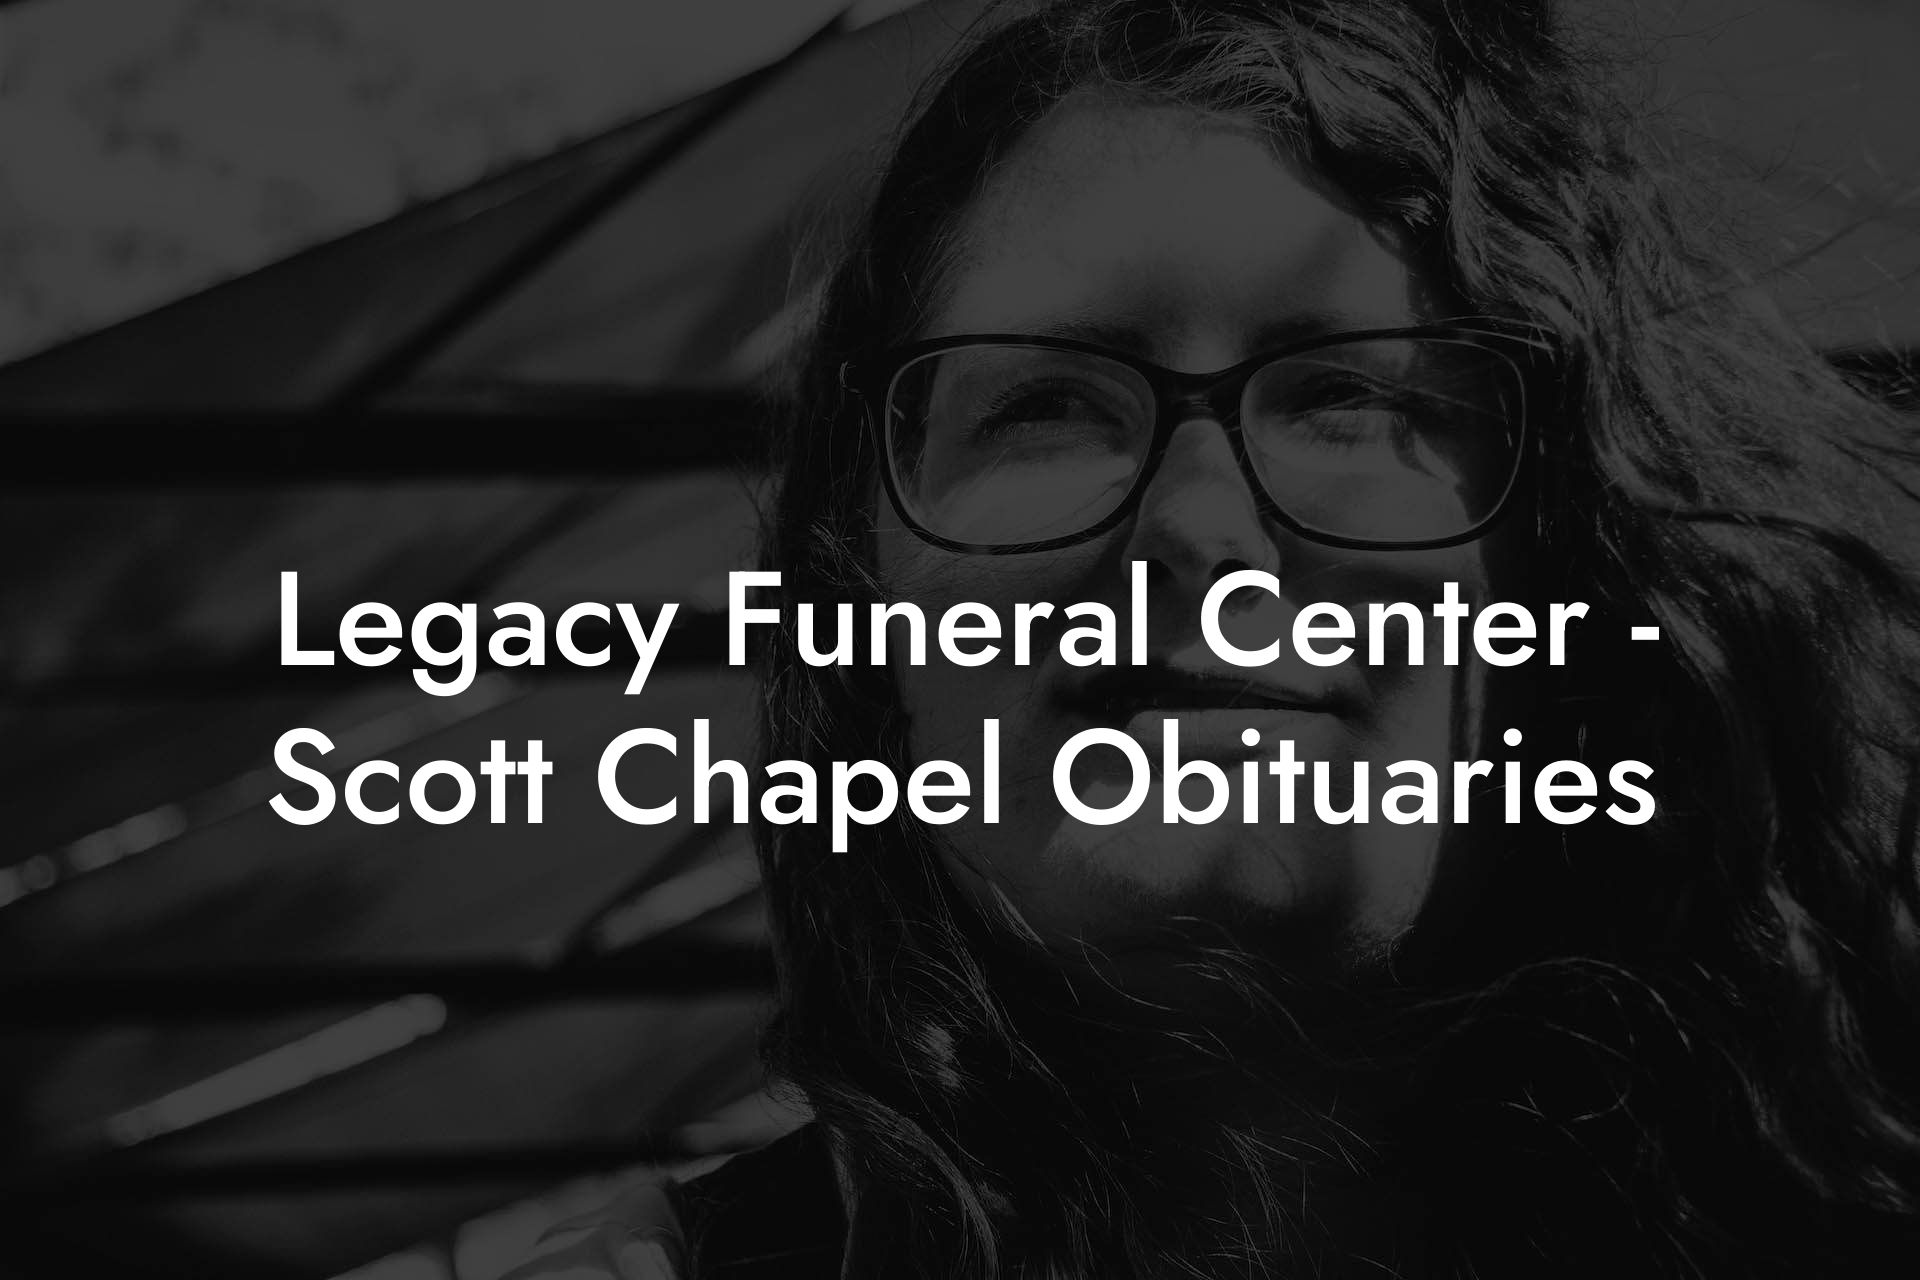 Legacy Funeral Center - Scott Chapel Obituaries